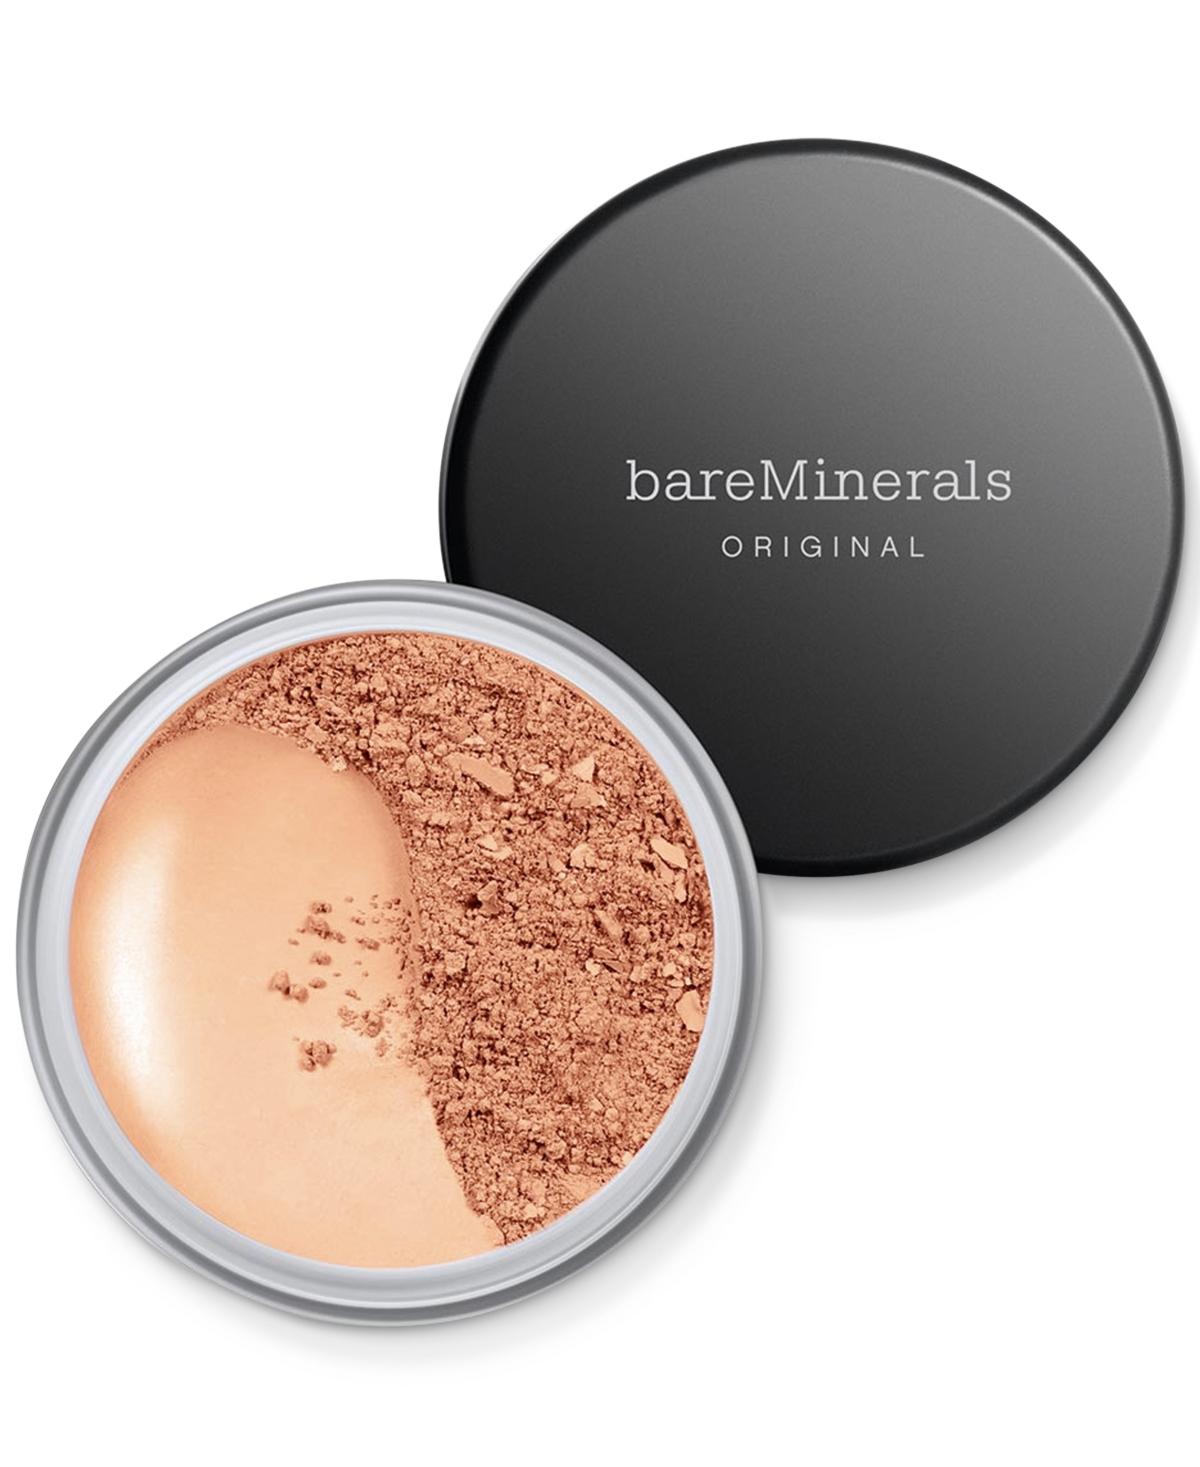 Bareminerals Original Loose Powder Foundation Spf 15 In Golden Nude  - For Medium To Tan Skin Wi